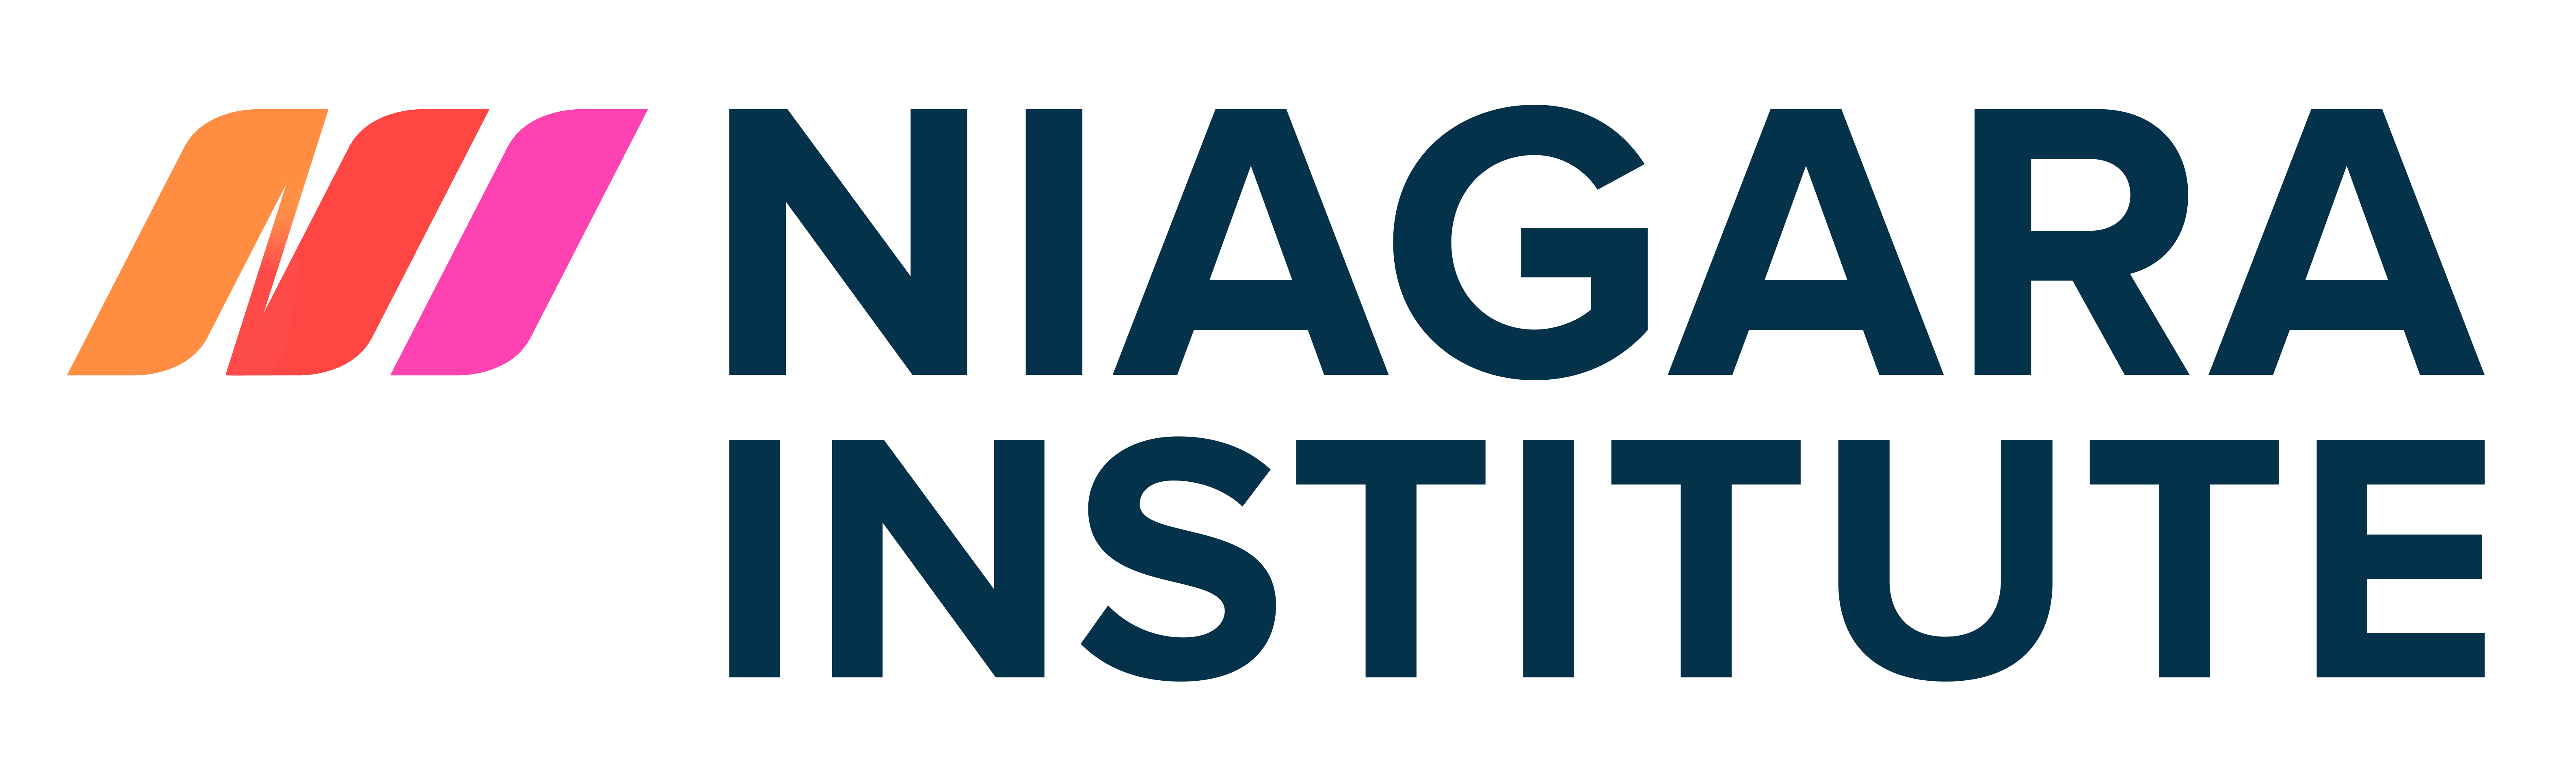 Niagara Institute